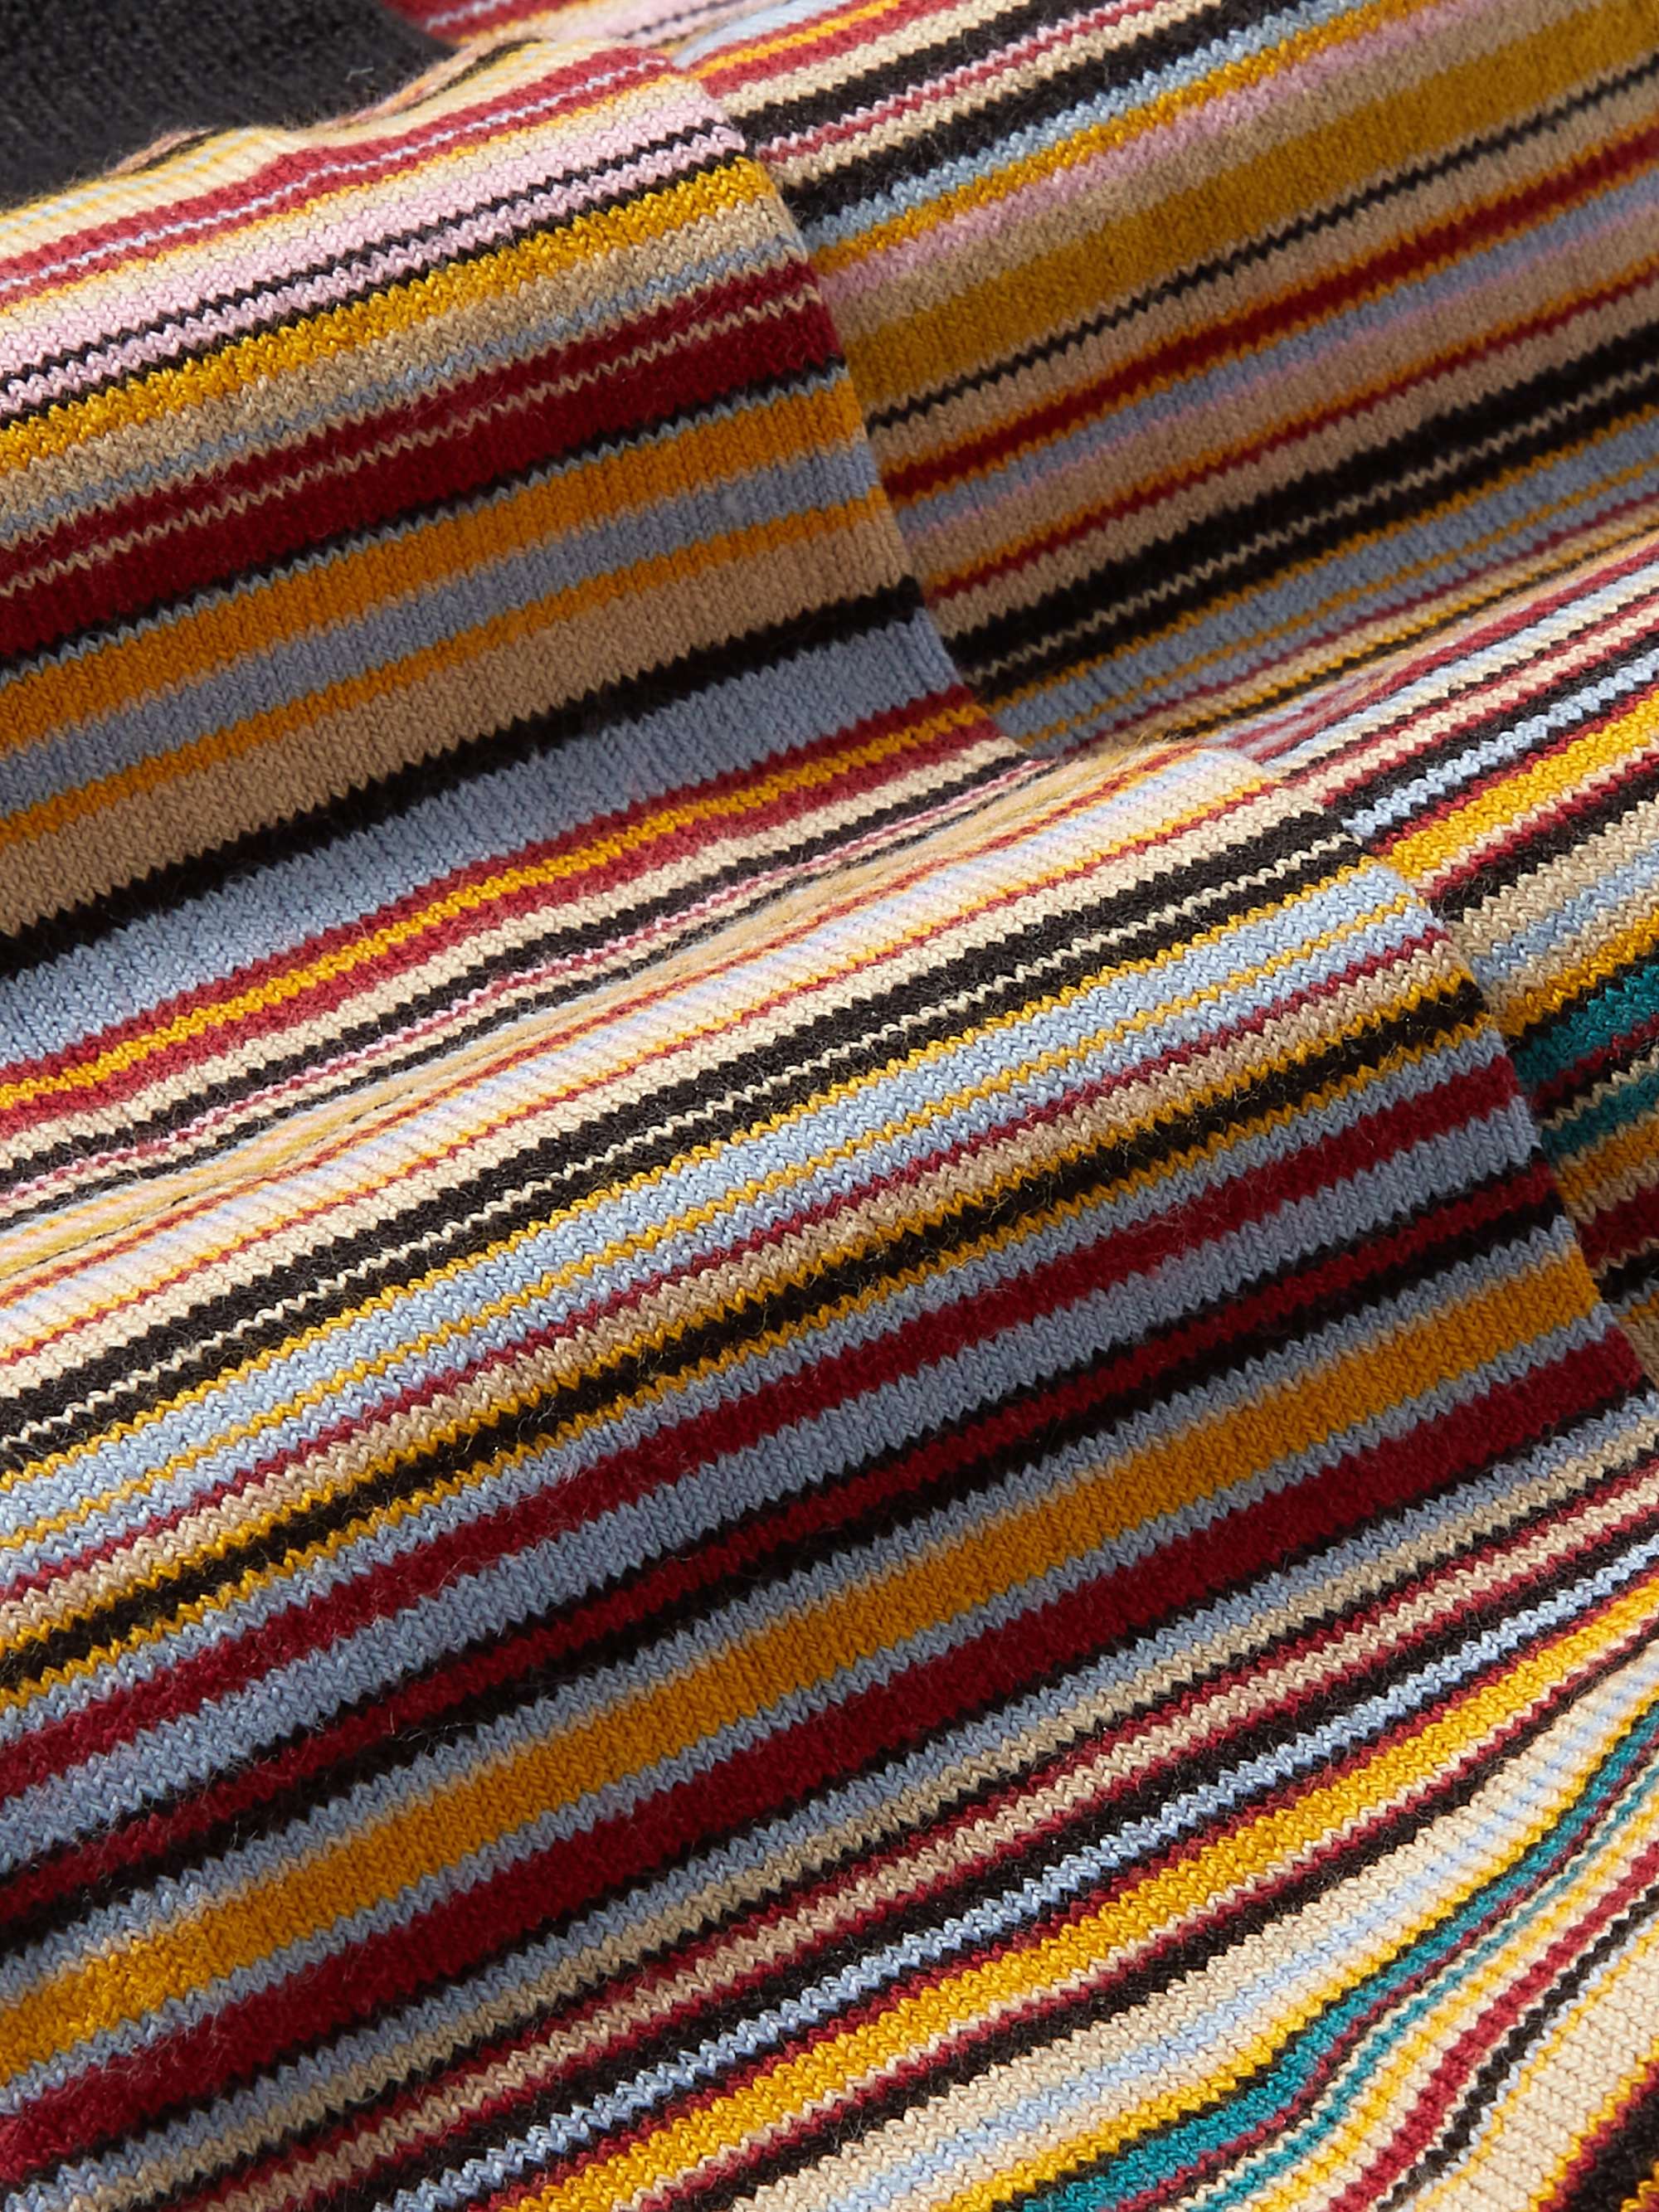 PAUL SMITH Striped Cotton-Blend Socks